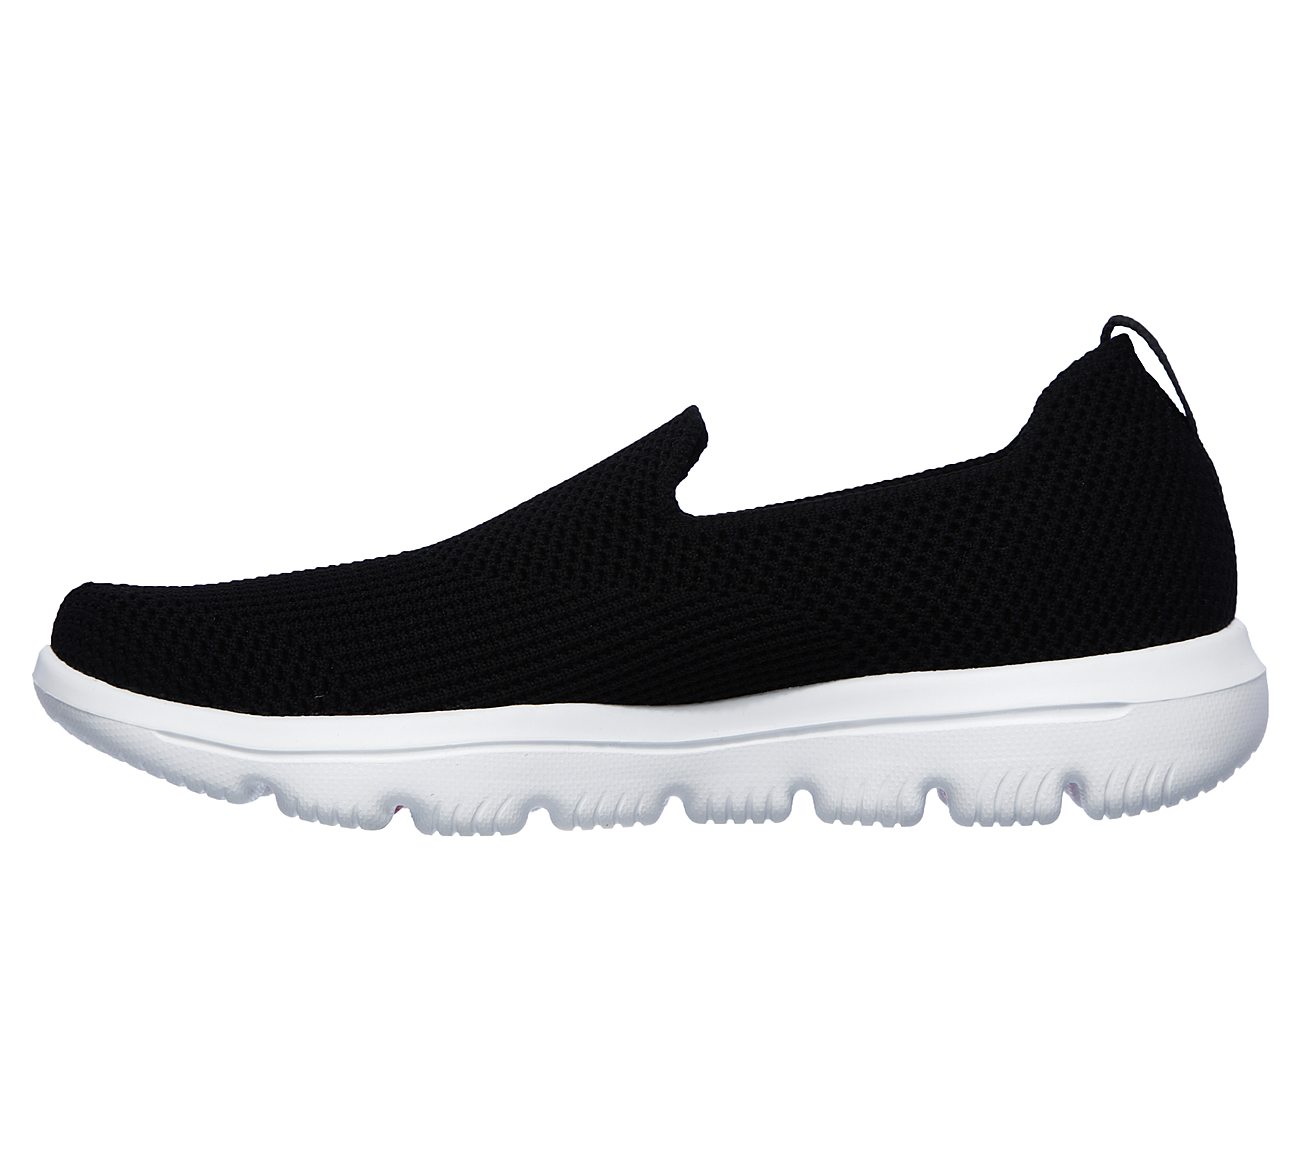 GO WALK EVOLUTION ULTRA-ENDLE, BLACK/WHITE Footwear Left View